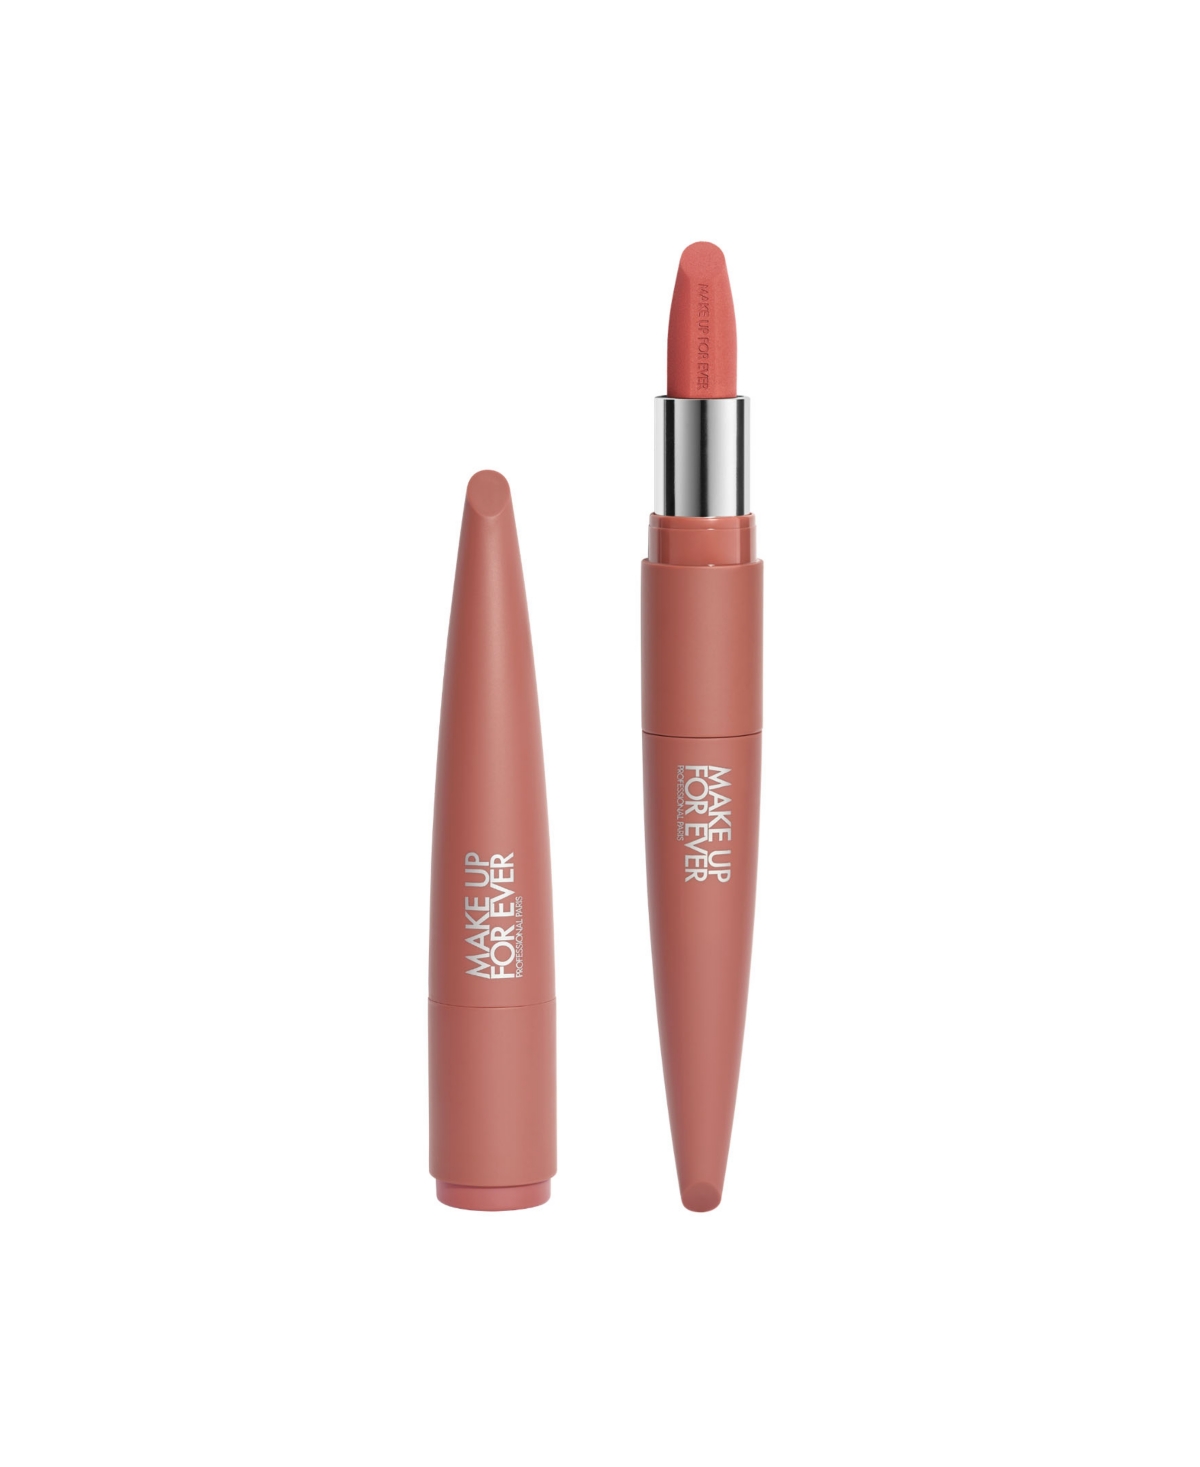 Make Up For Ever Rouge Artist Velvet Nude Soft Matte Lipstick, Created For Macy's In Warm Mocha